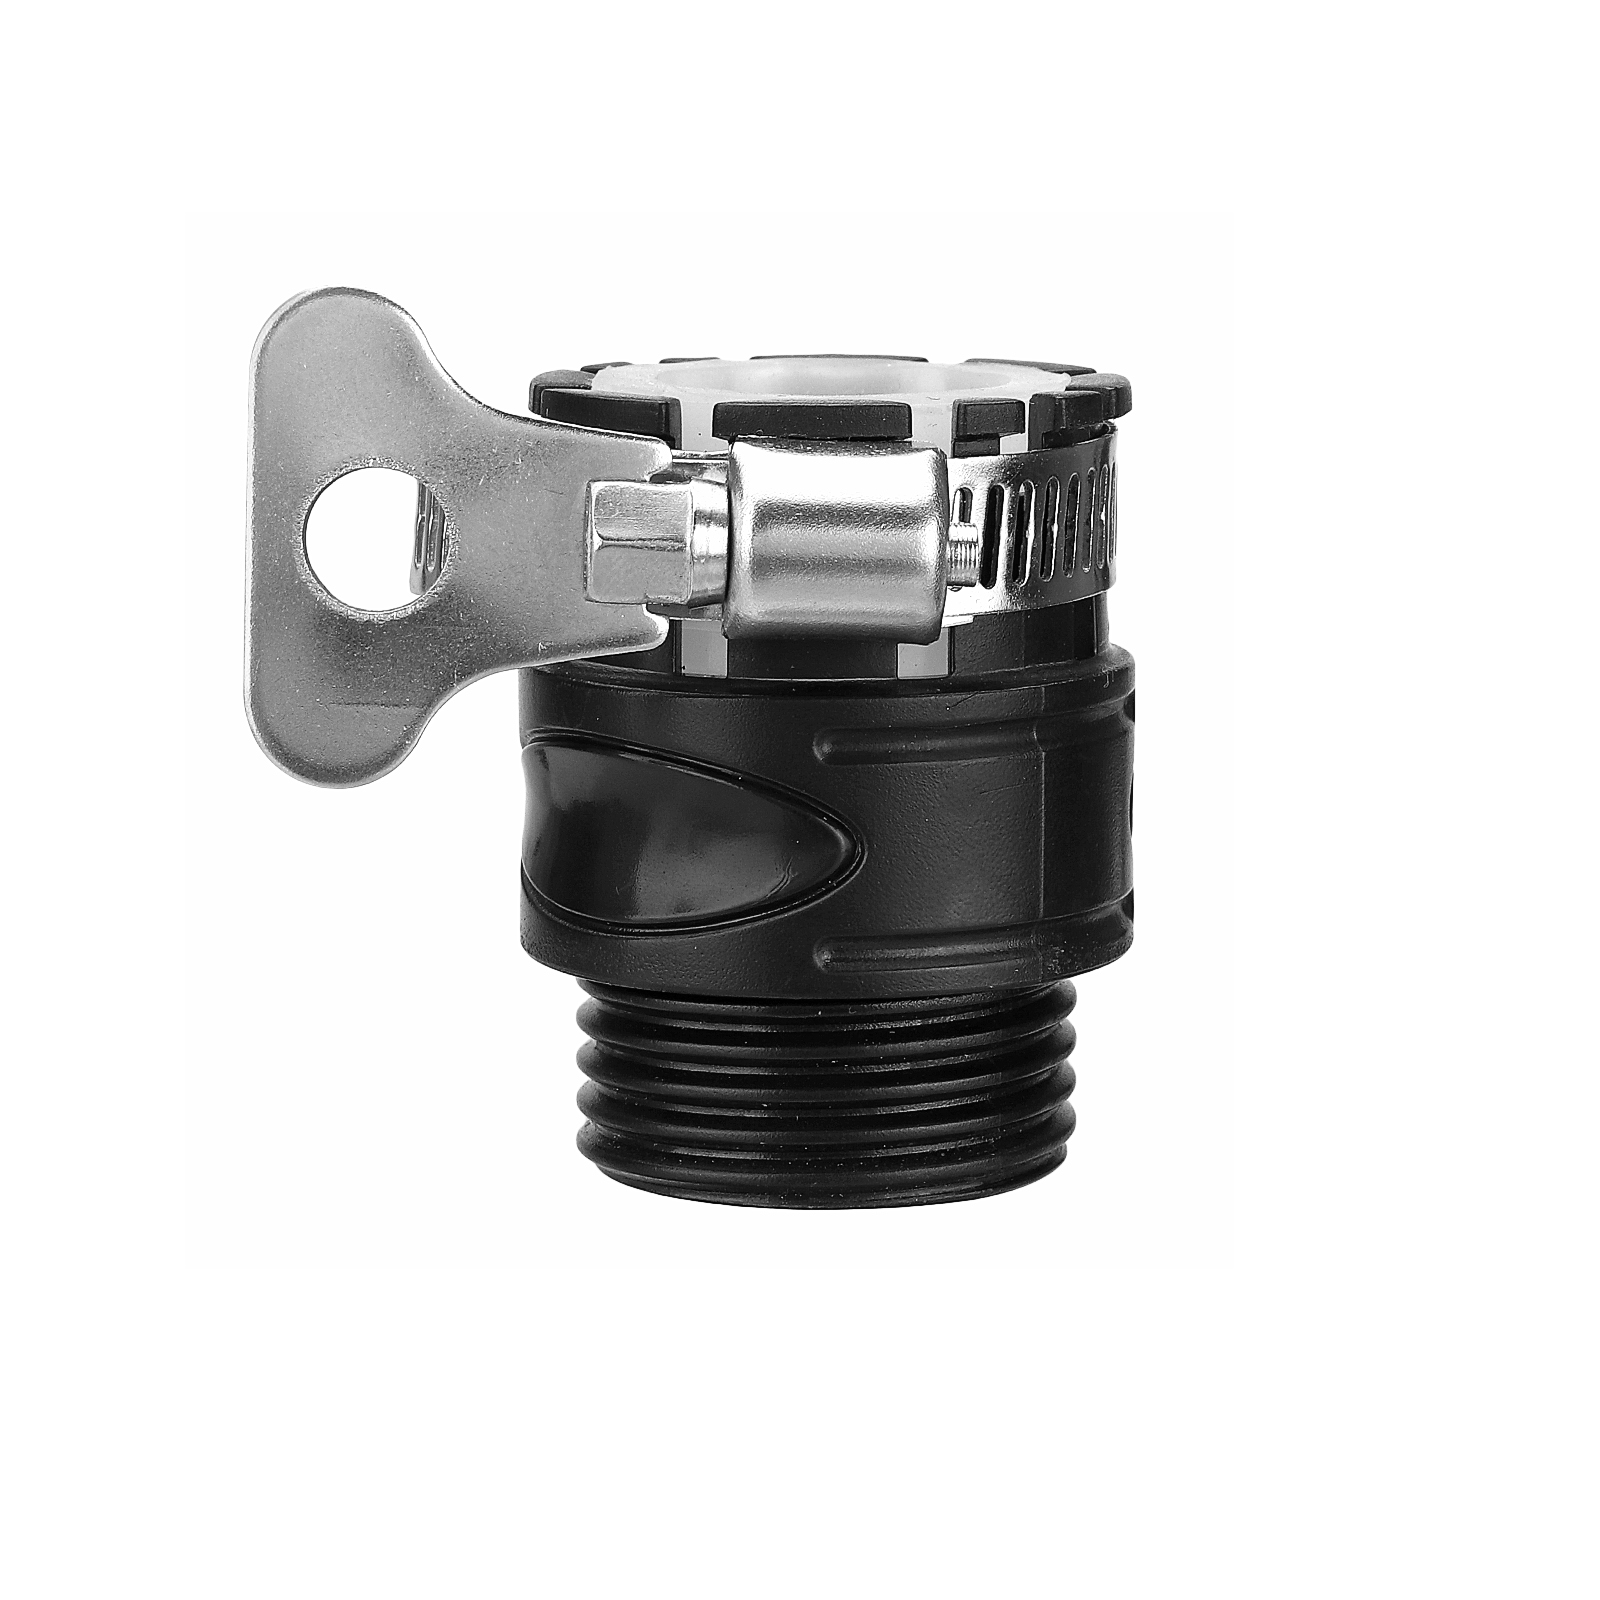 NASUM-402M-Automatic-Sprinkler-DIY-Garden-Watering-Micro-Drip-Irrigation-System-Hose-Kits-1891179-30